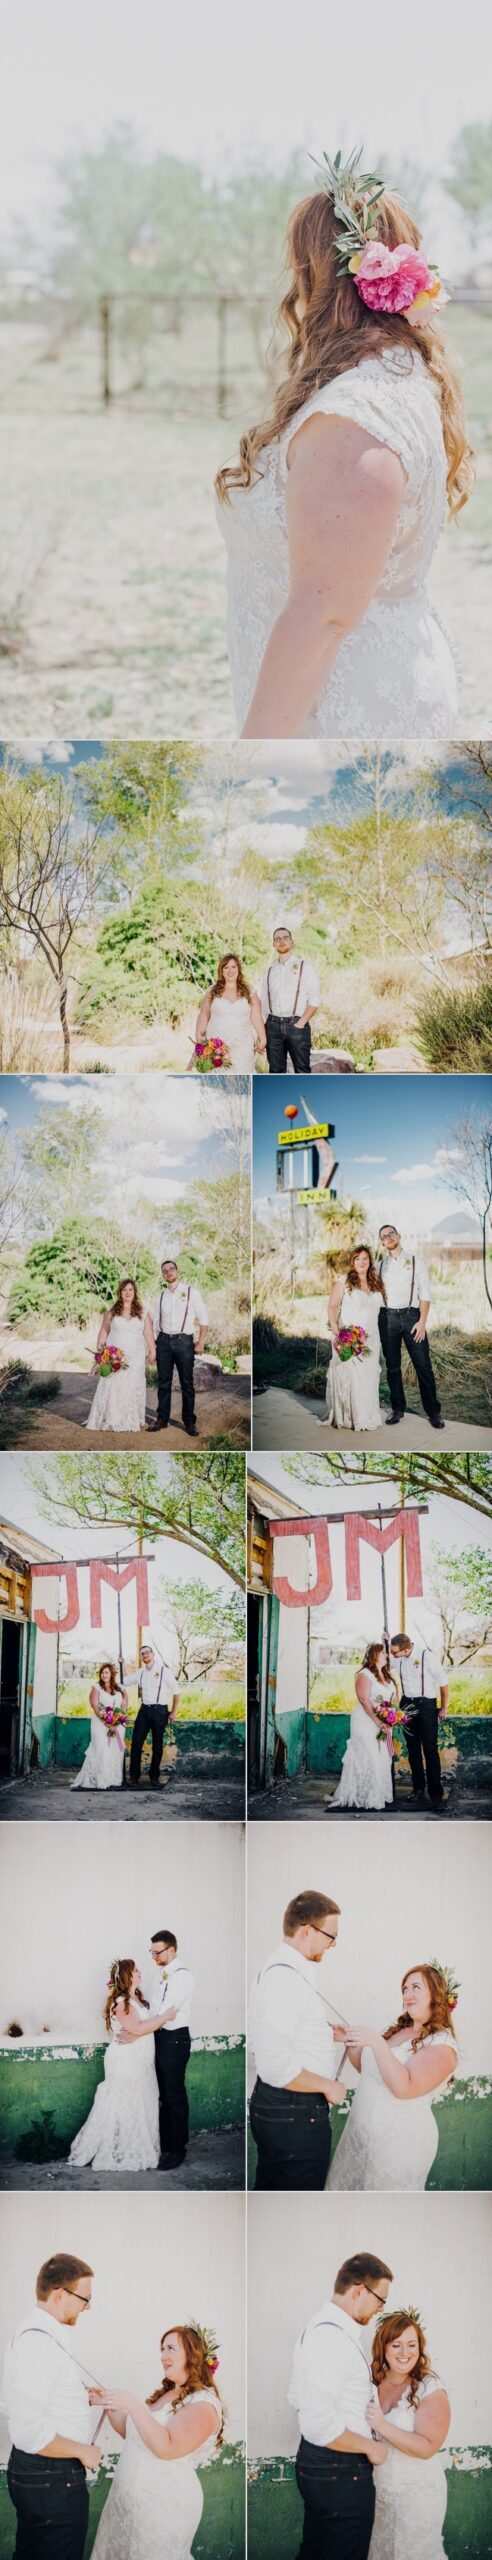 marfa-destination-elopement-weddingphotographers21-9305203